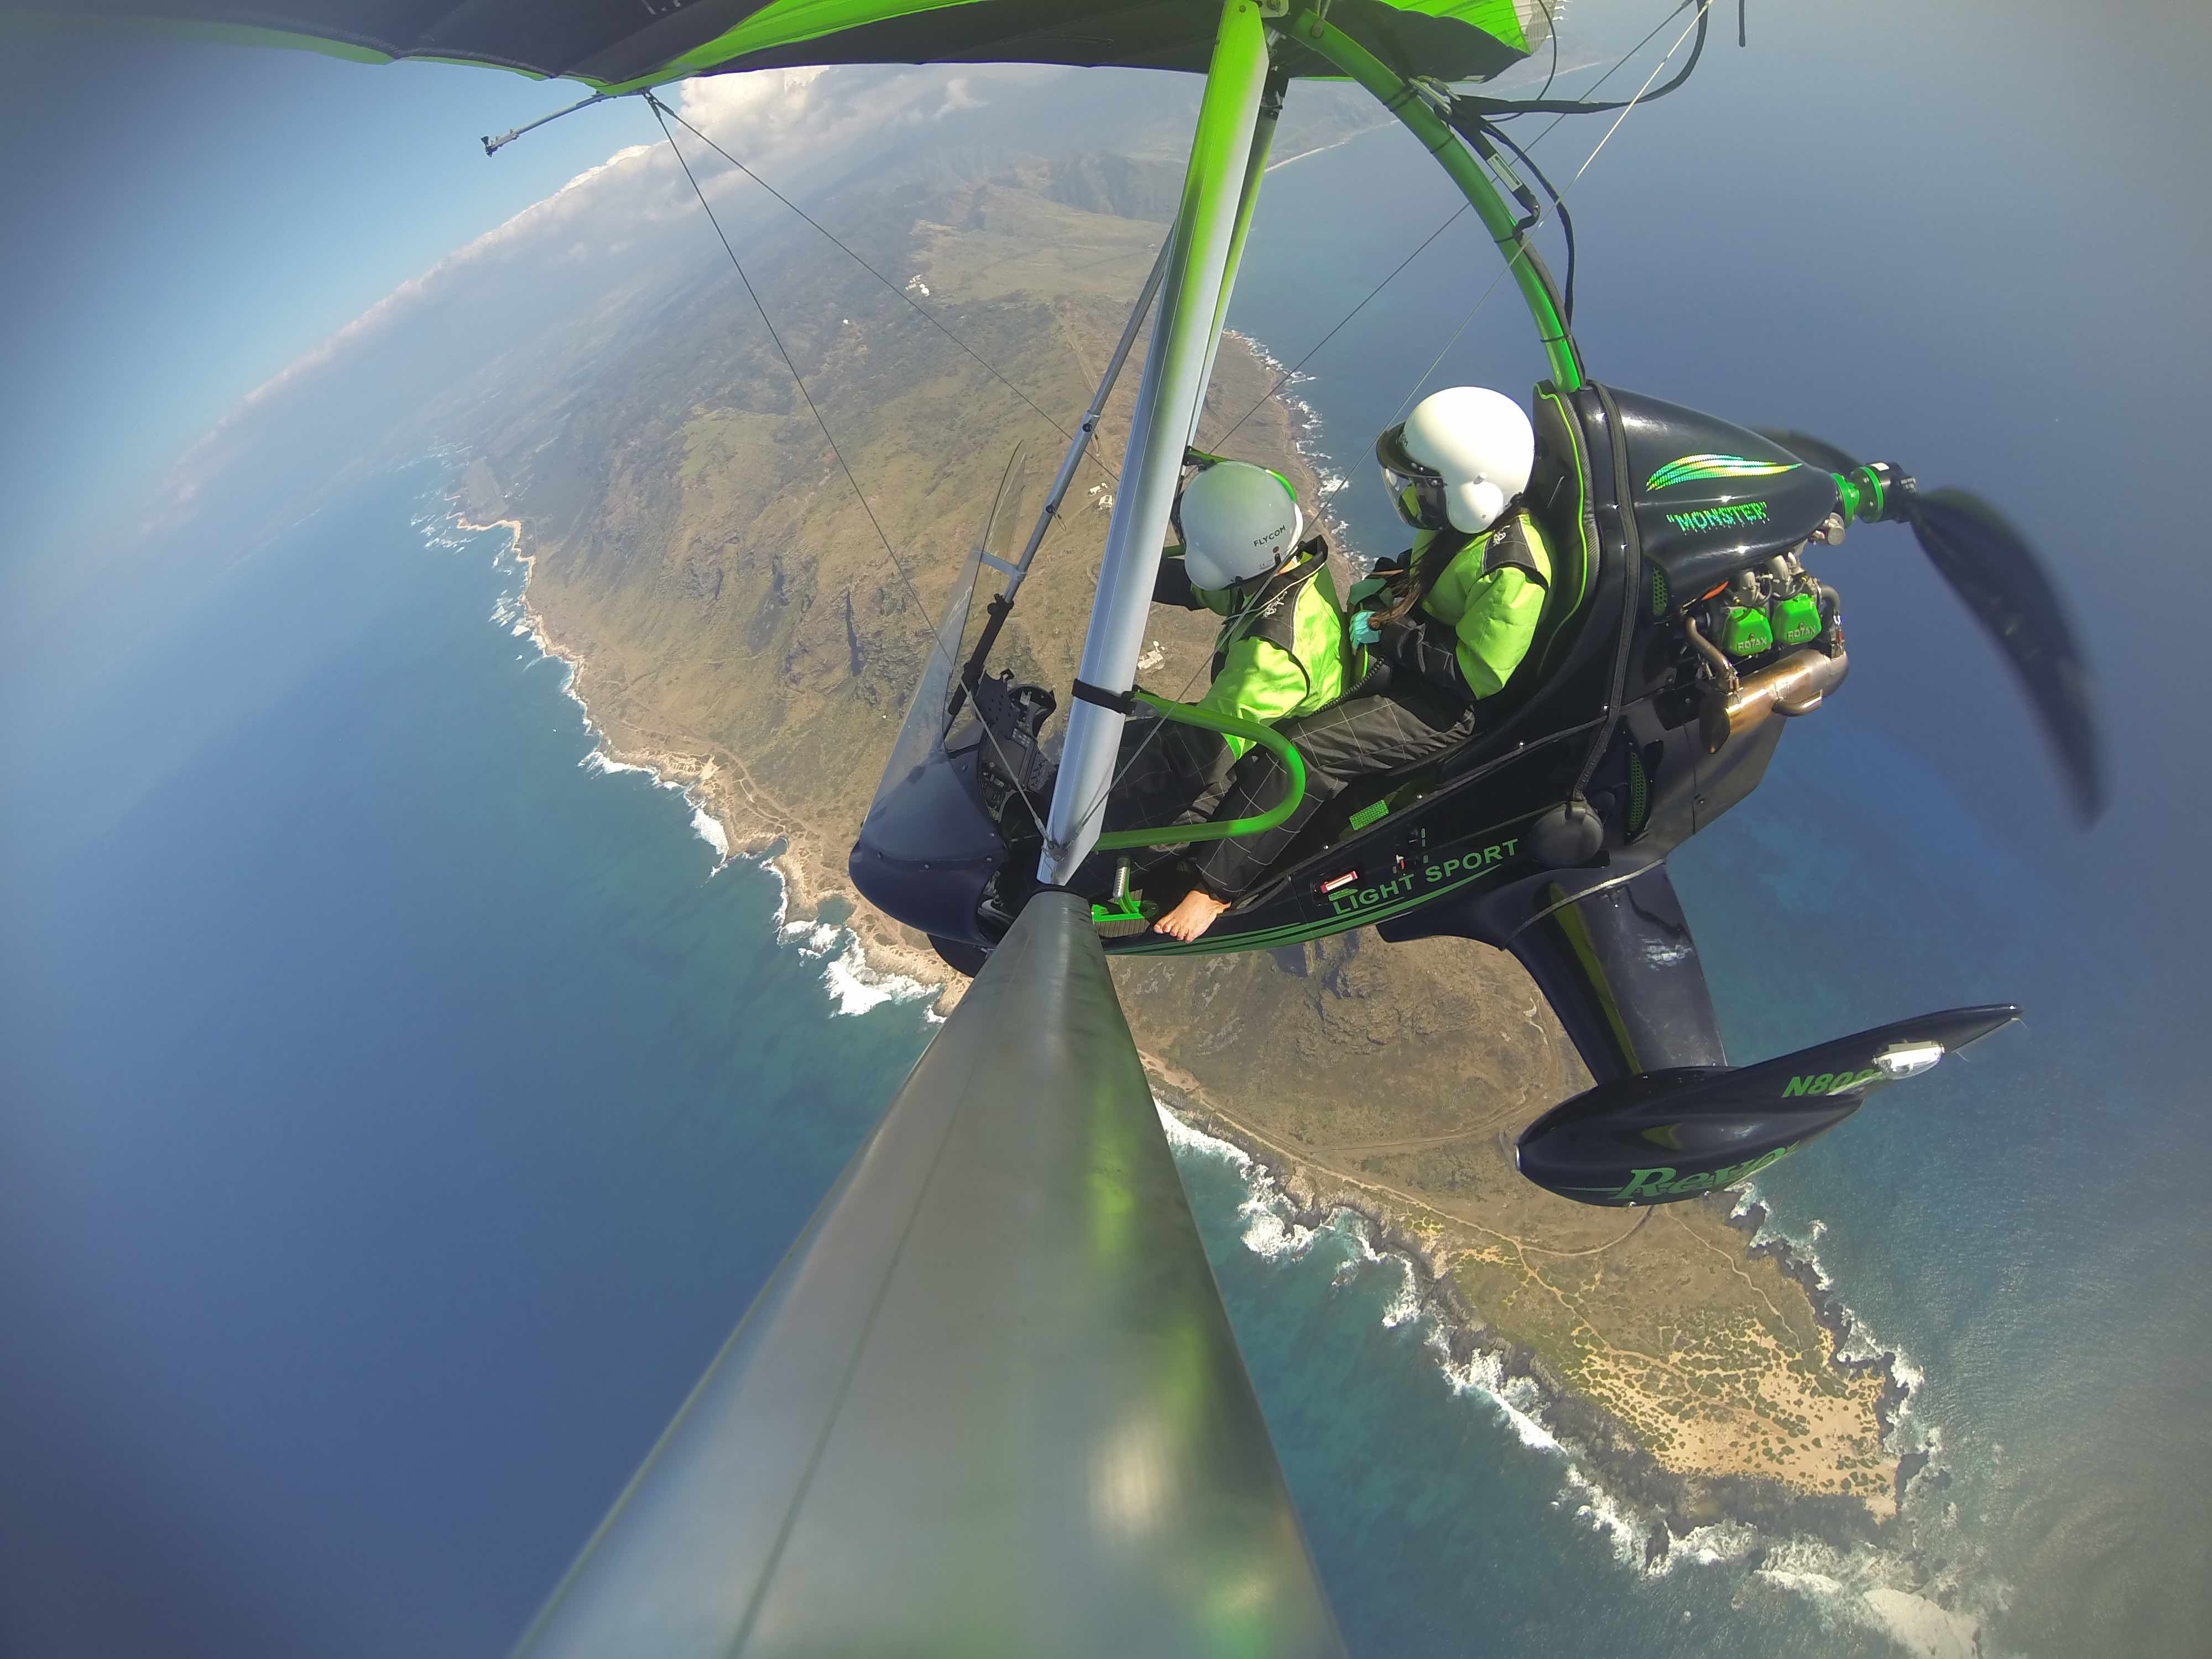 Hang Gliding Hawaii